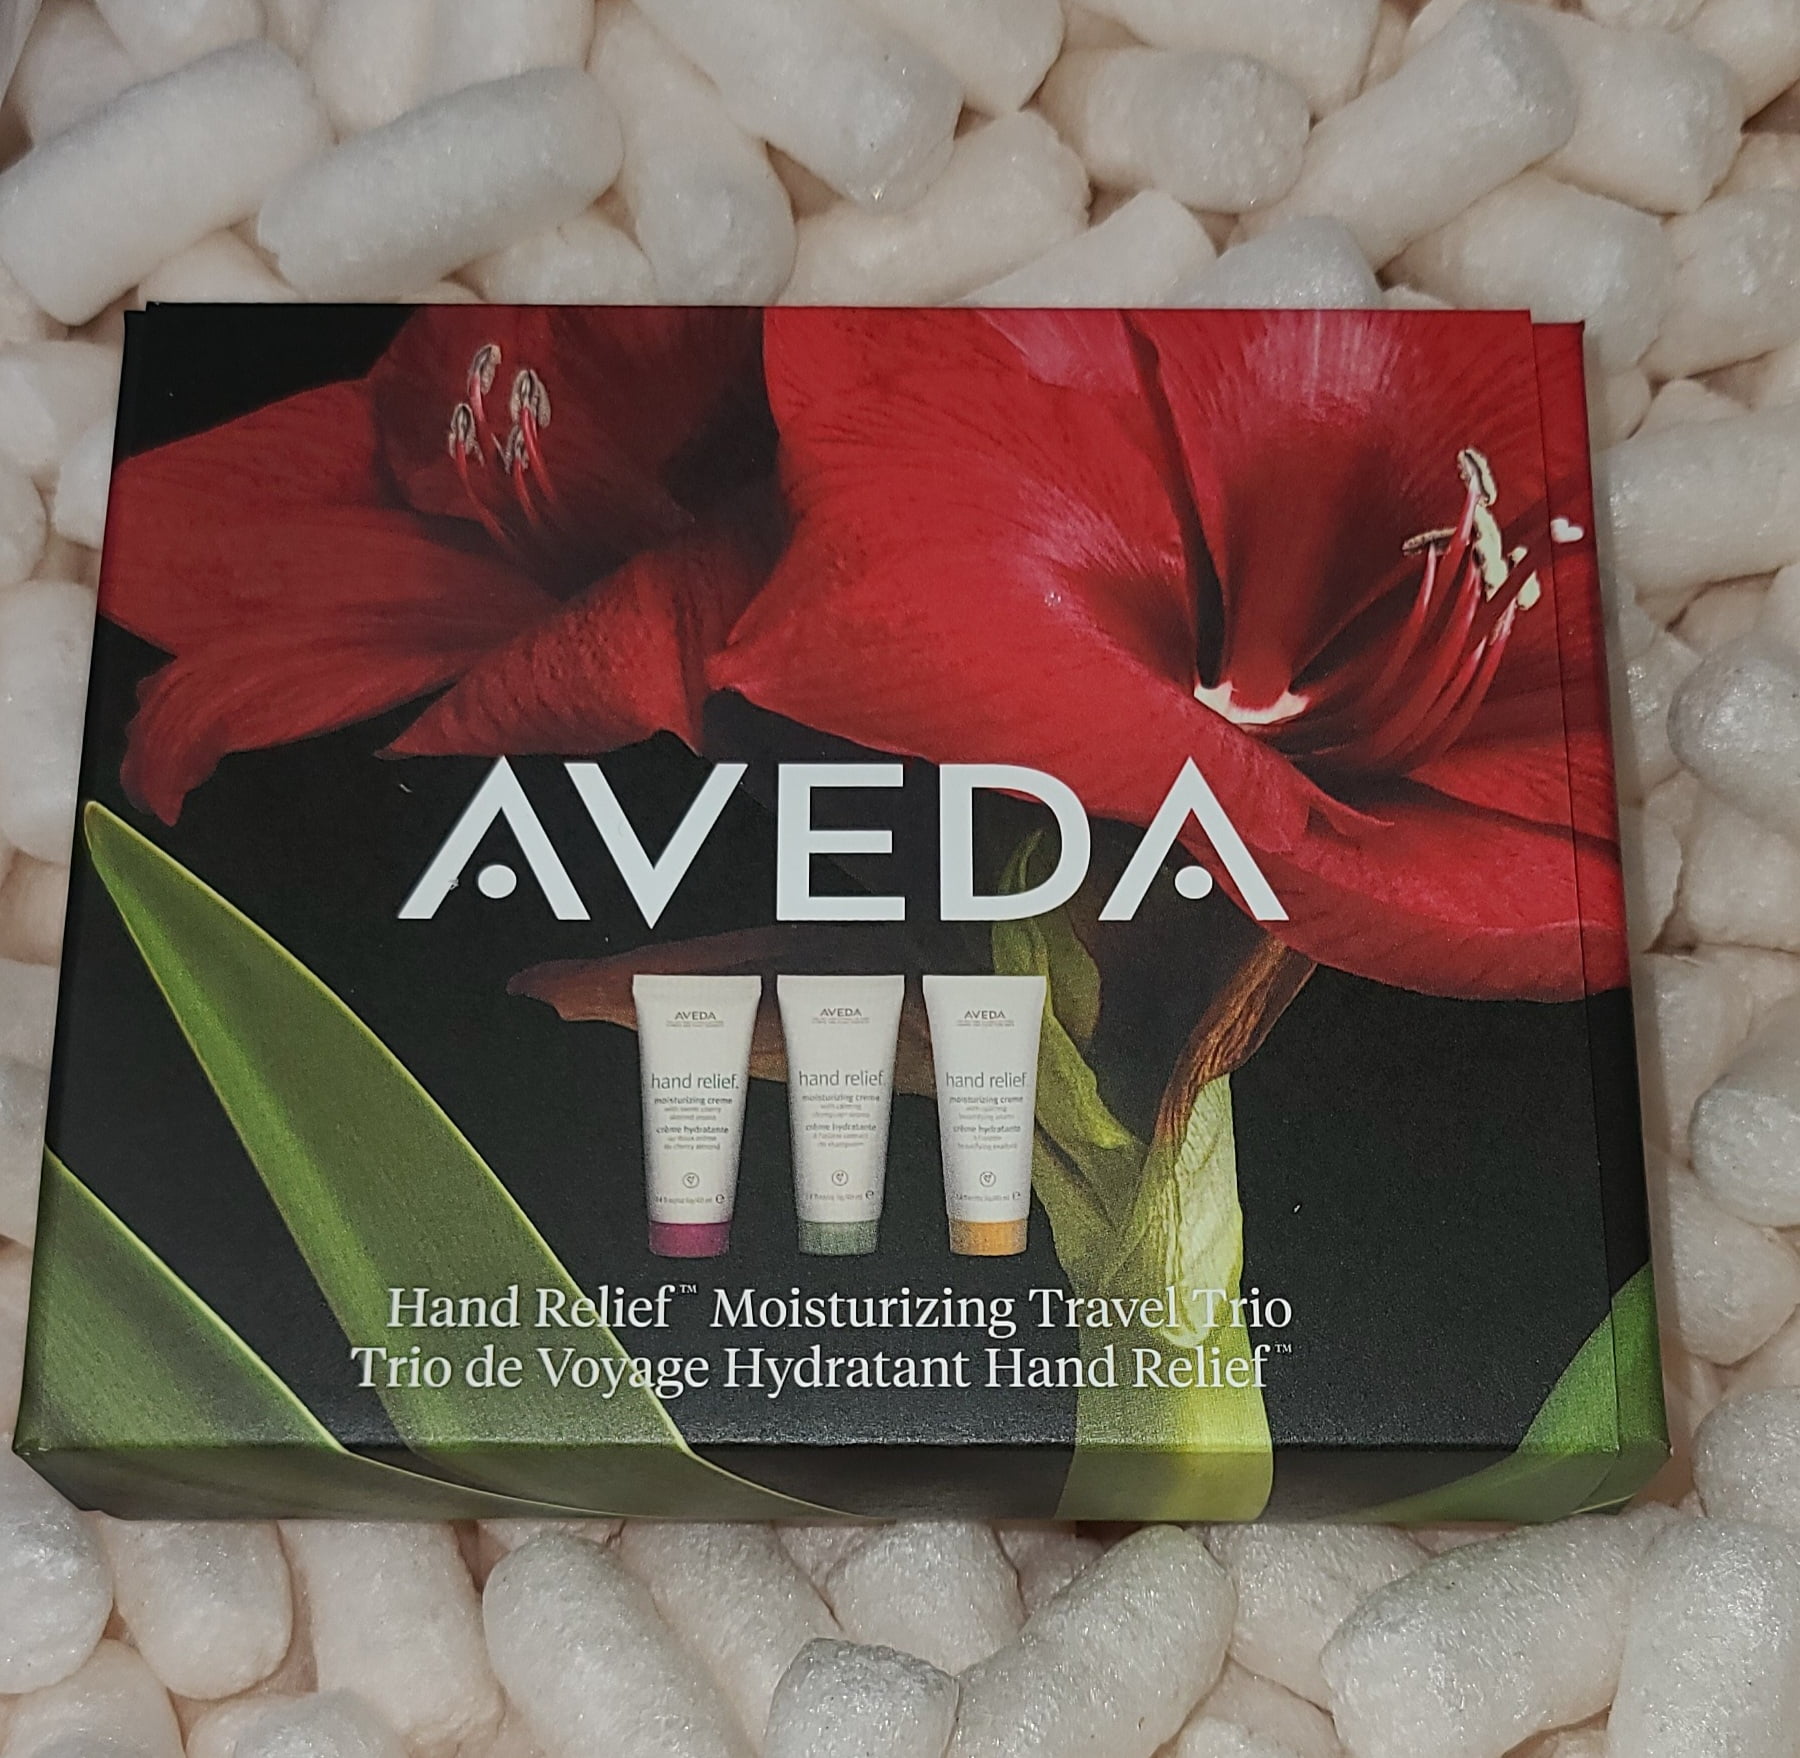 Aveda hand relief moisturizing travel trio 1.4oz